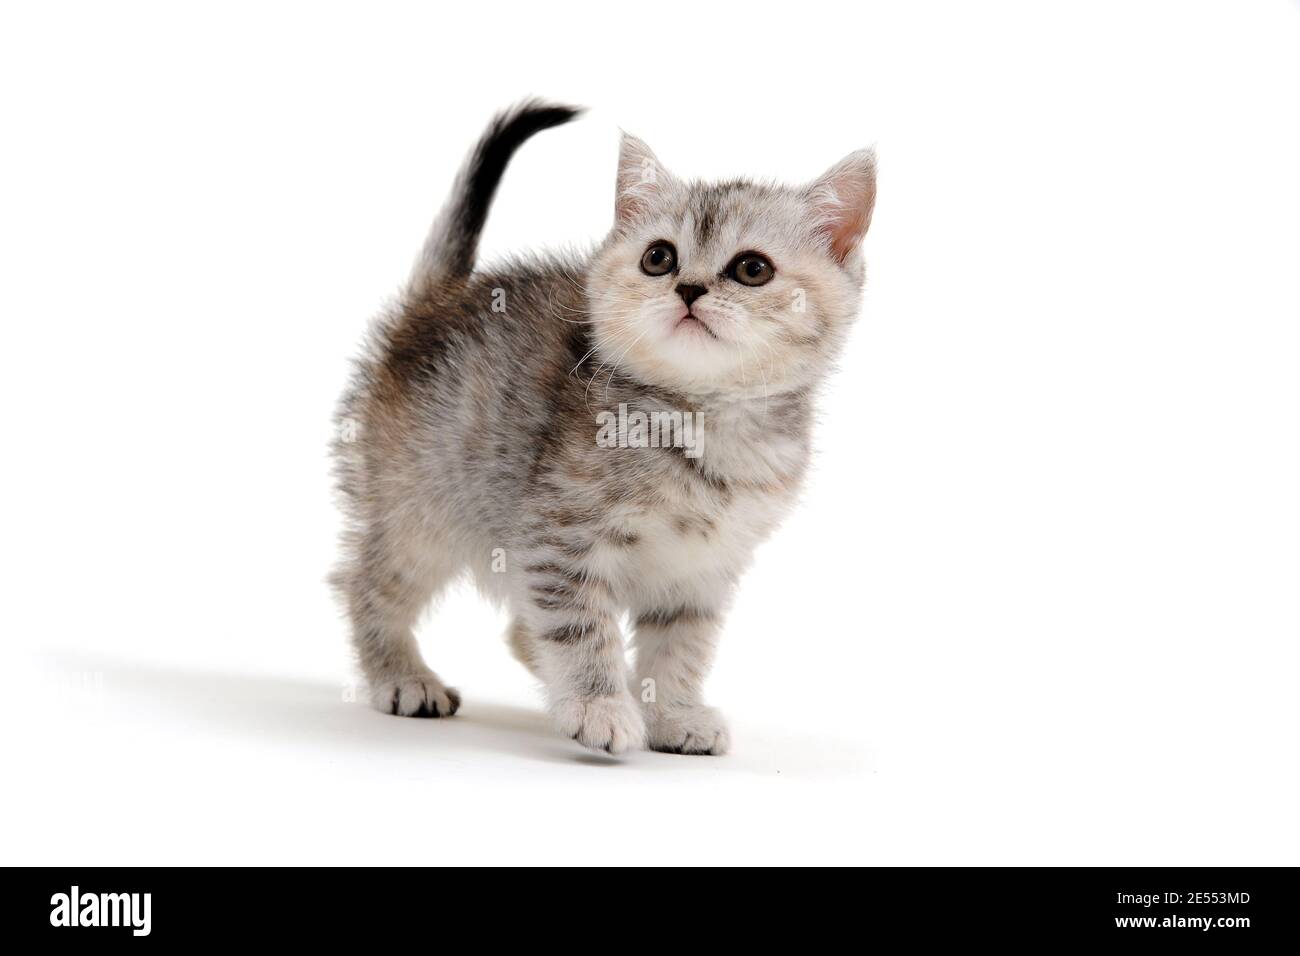 British shorthair cat on a white background Stock Photo